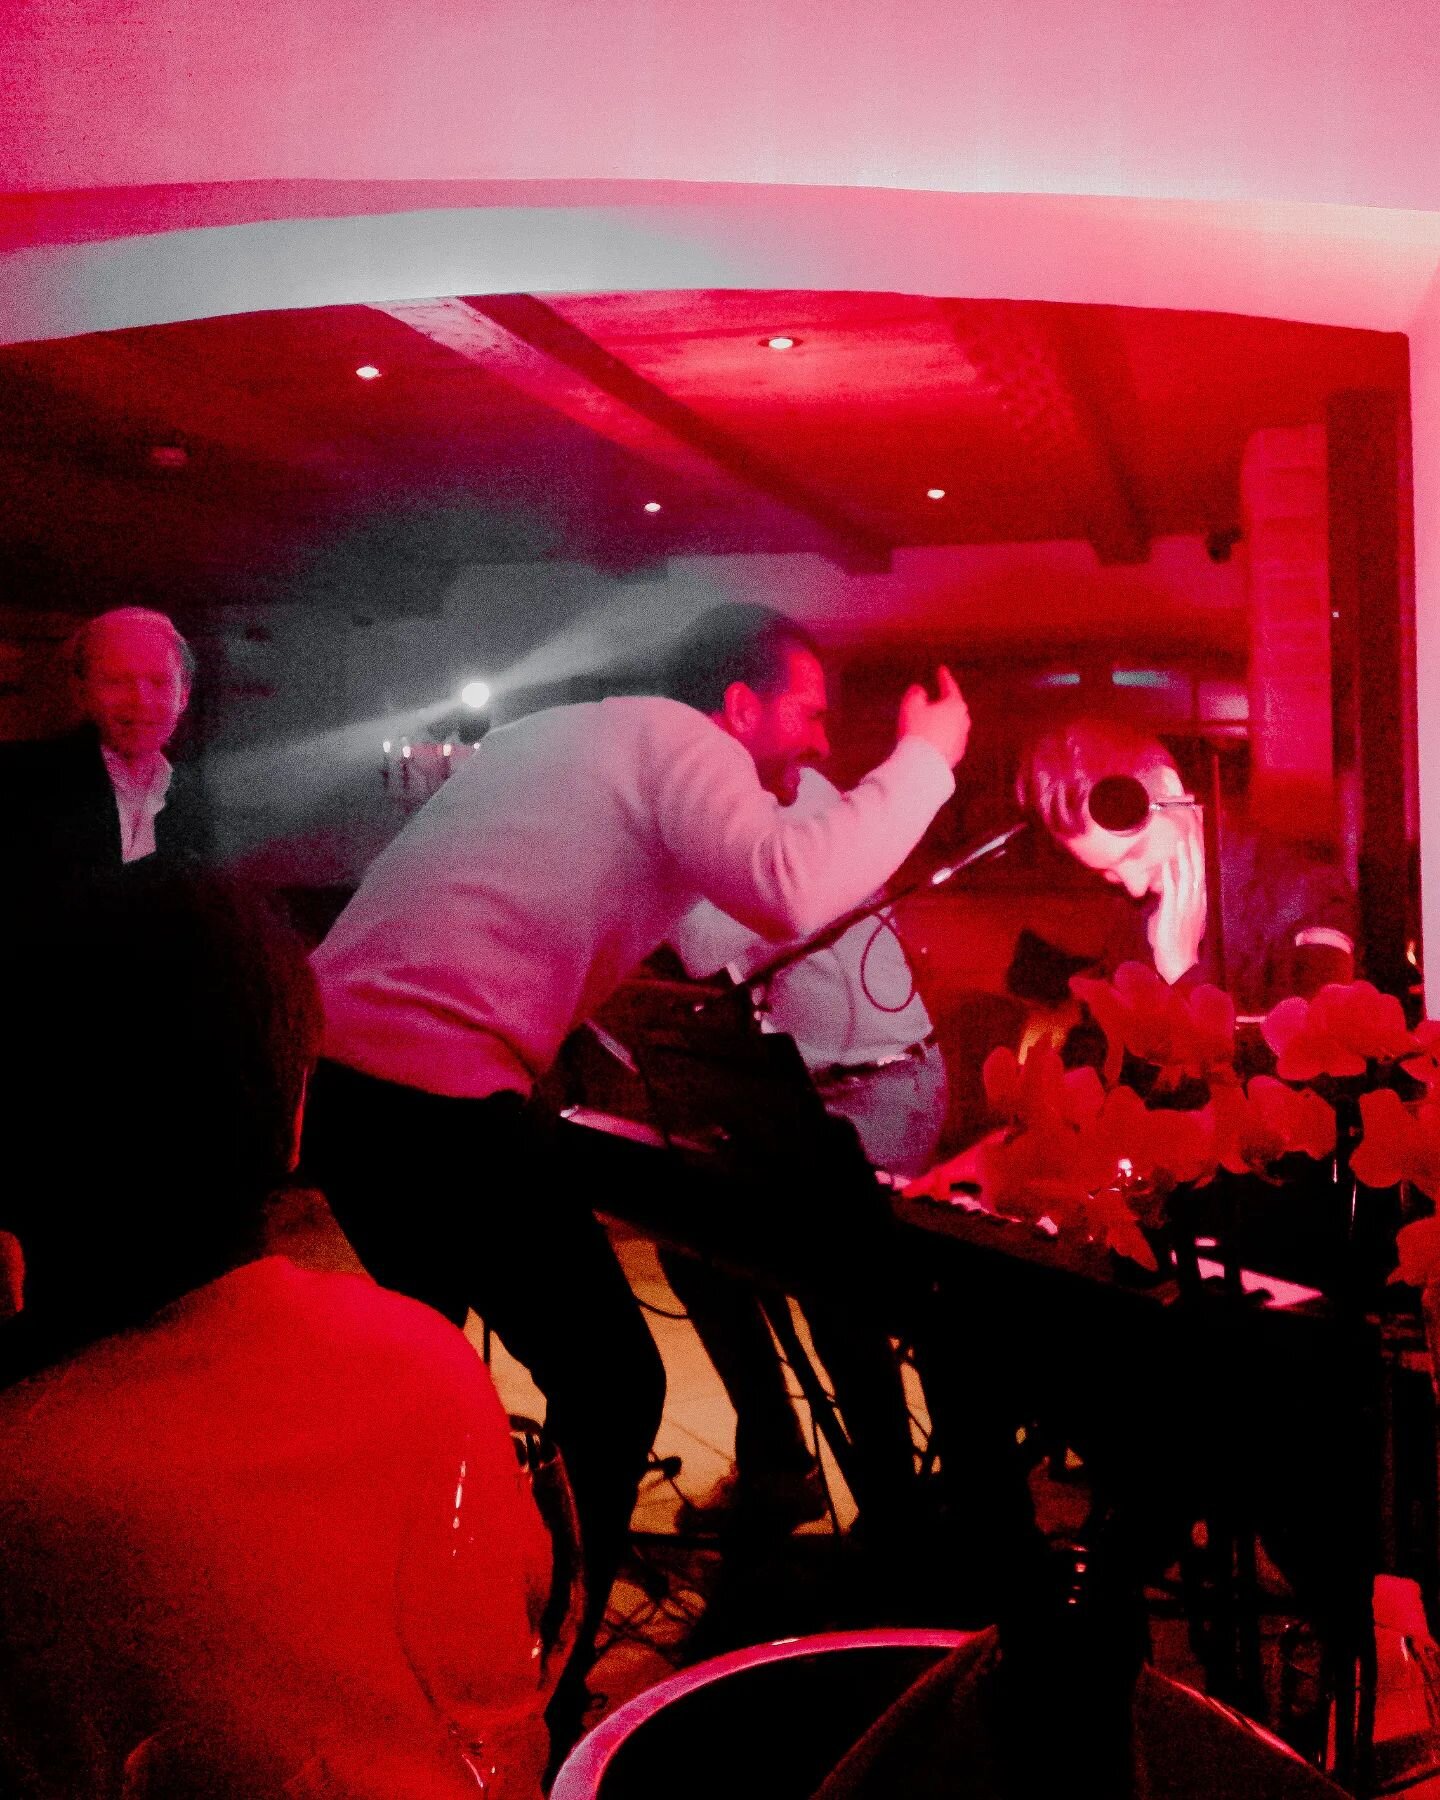 #TONIGHT at @kronevonlech ❤ #thomasdaubek #lechverliebt
.
.
.
.
#livemusic #barpiano #vocals #besthotels #entertainment